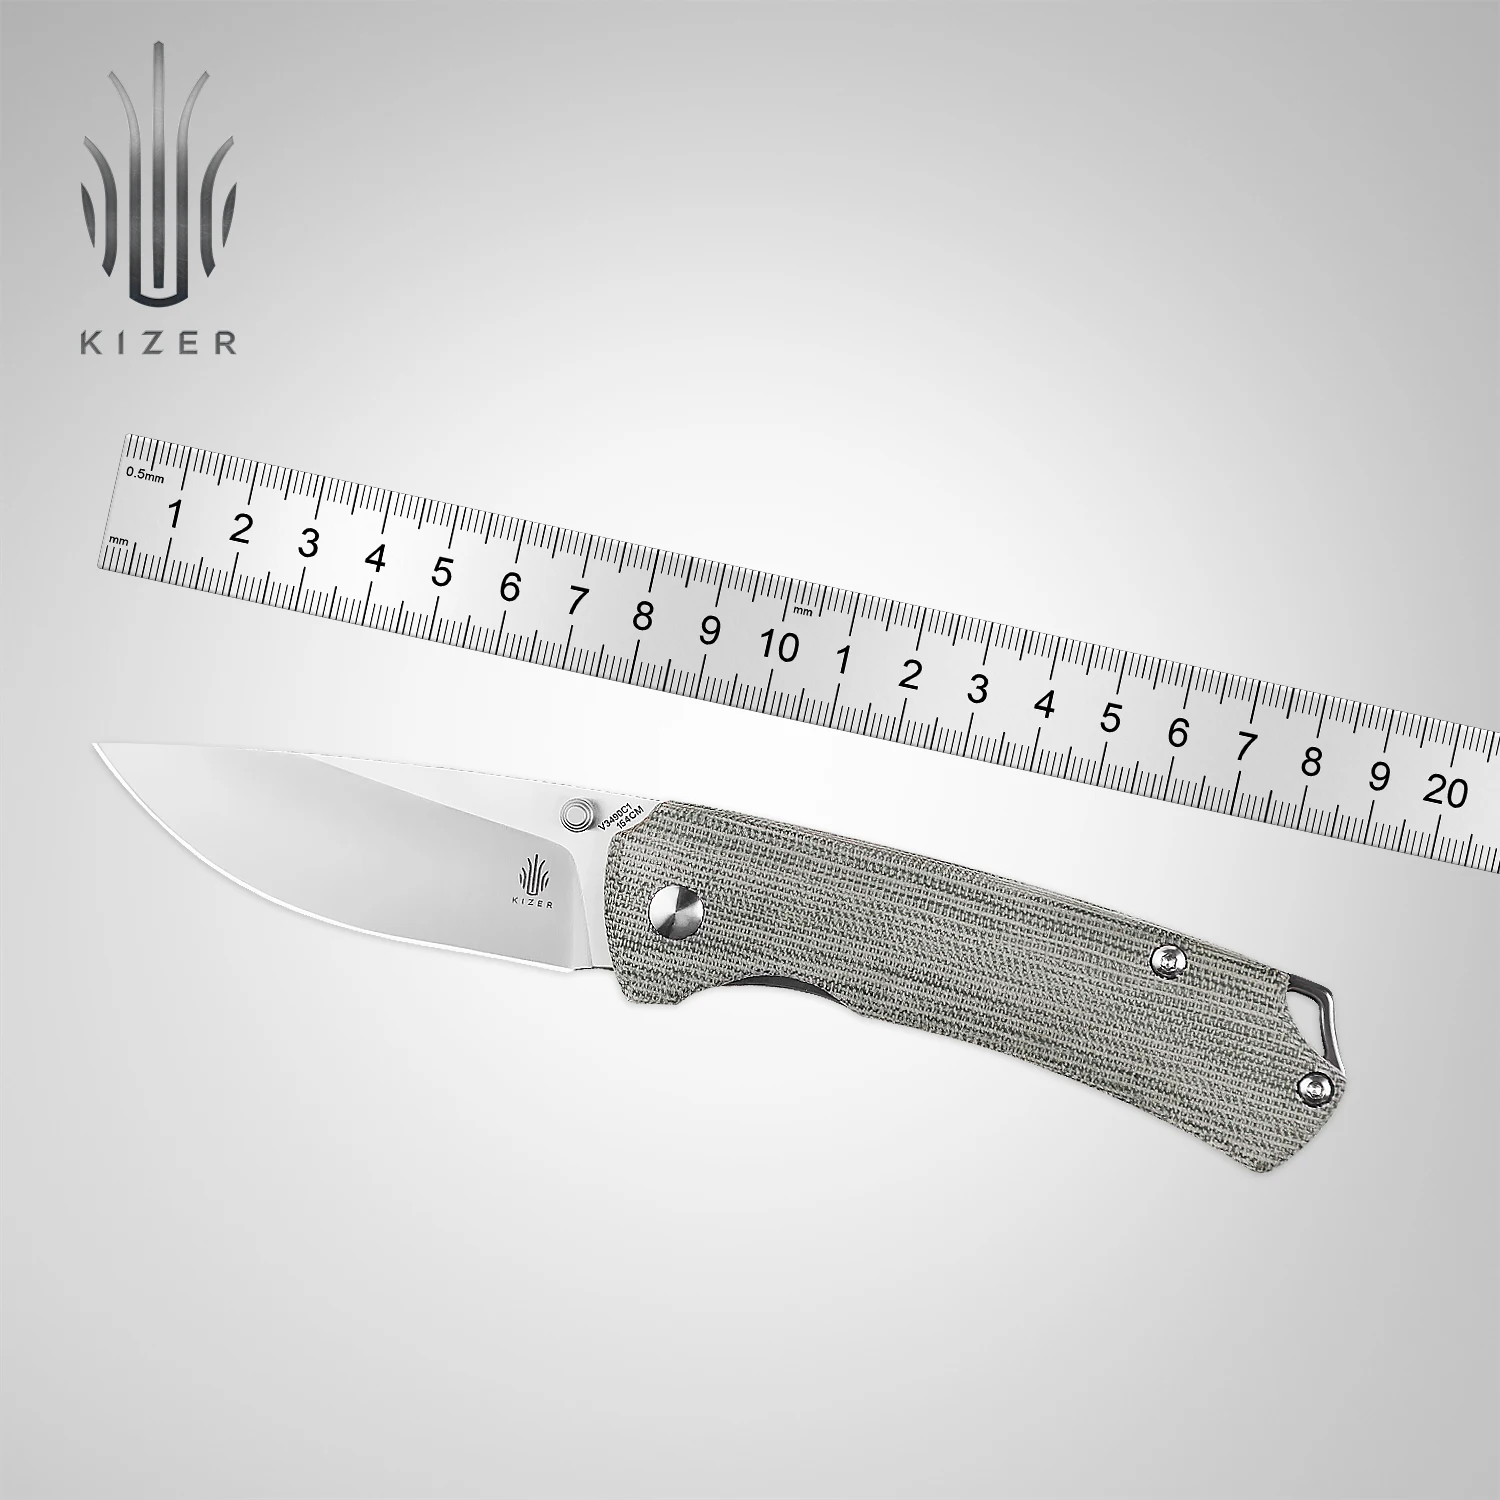 Kizer Folding Pocket Knife V3490C1 T1 2022 New Green Micarta Handle with 154CM Steel Blade Knife for Hunting